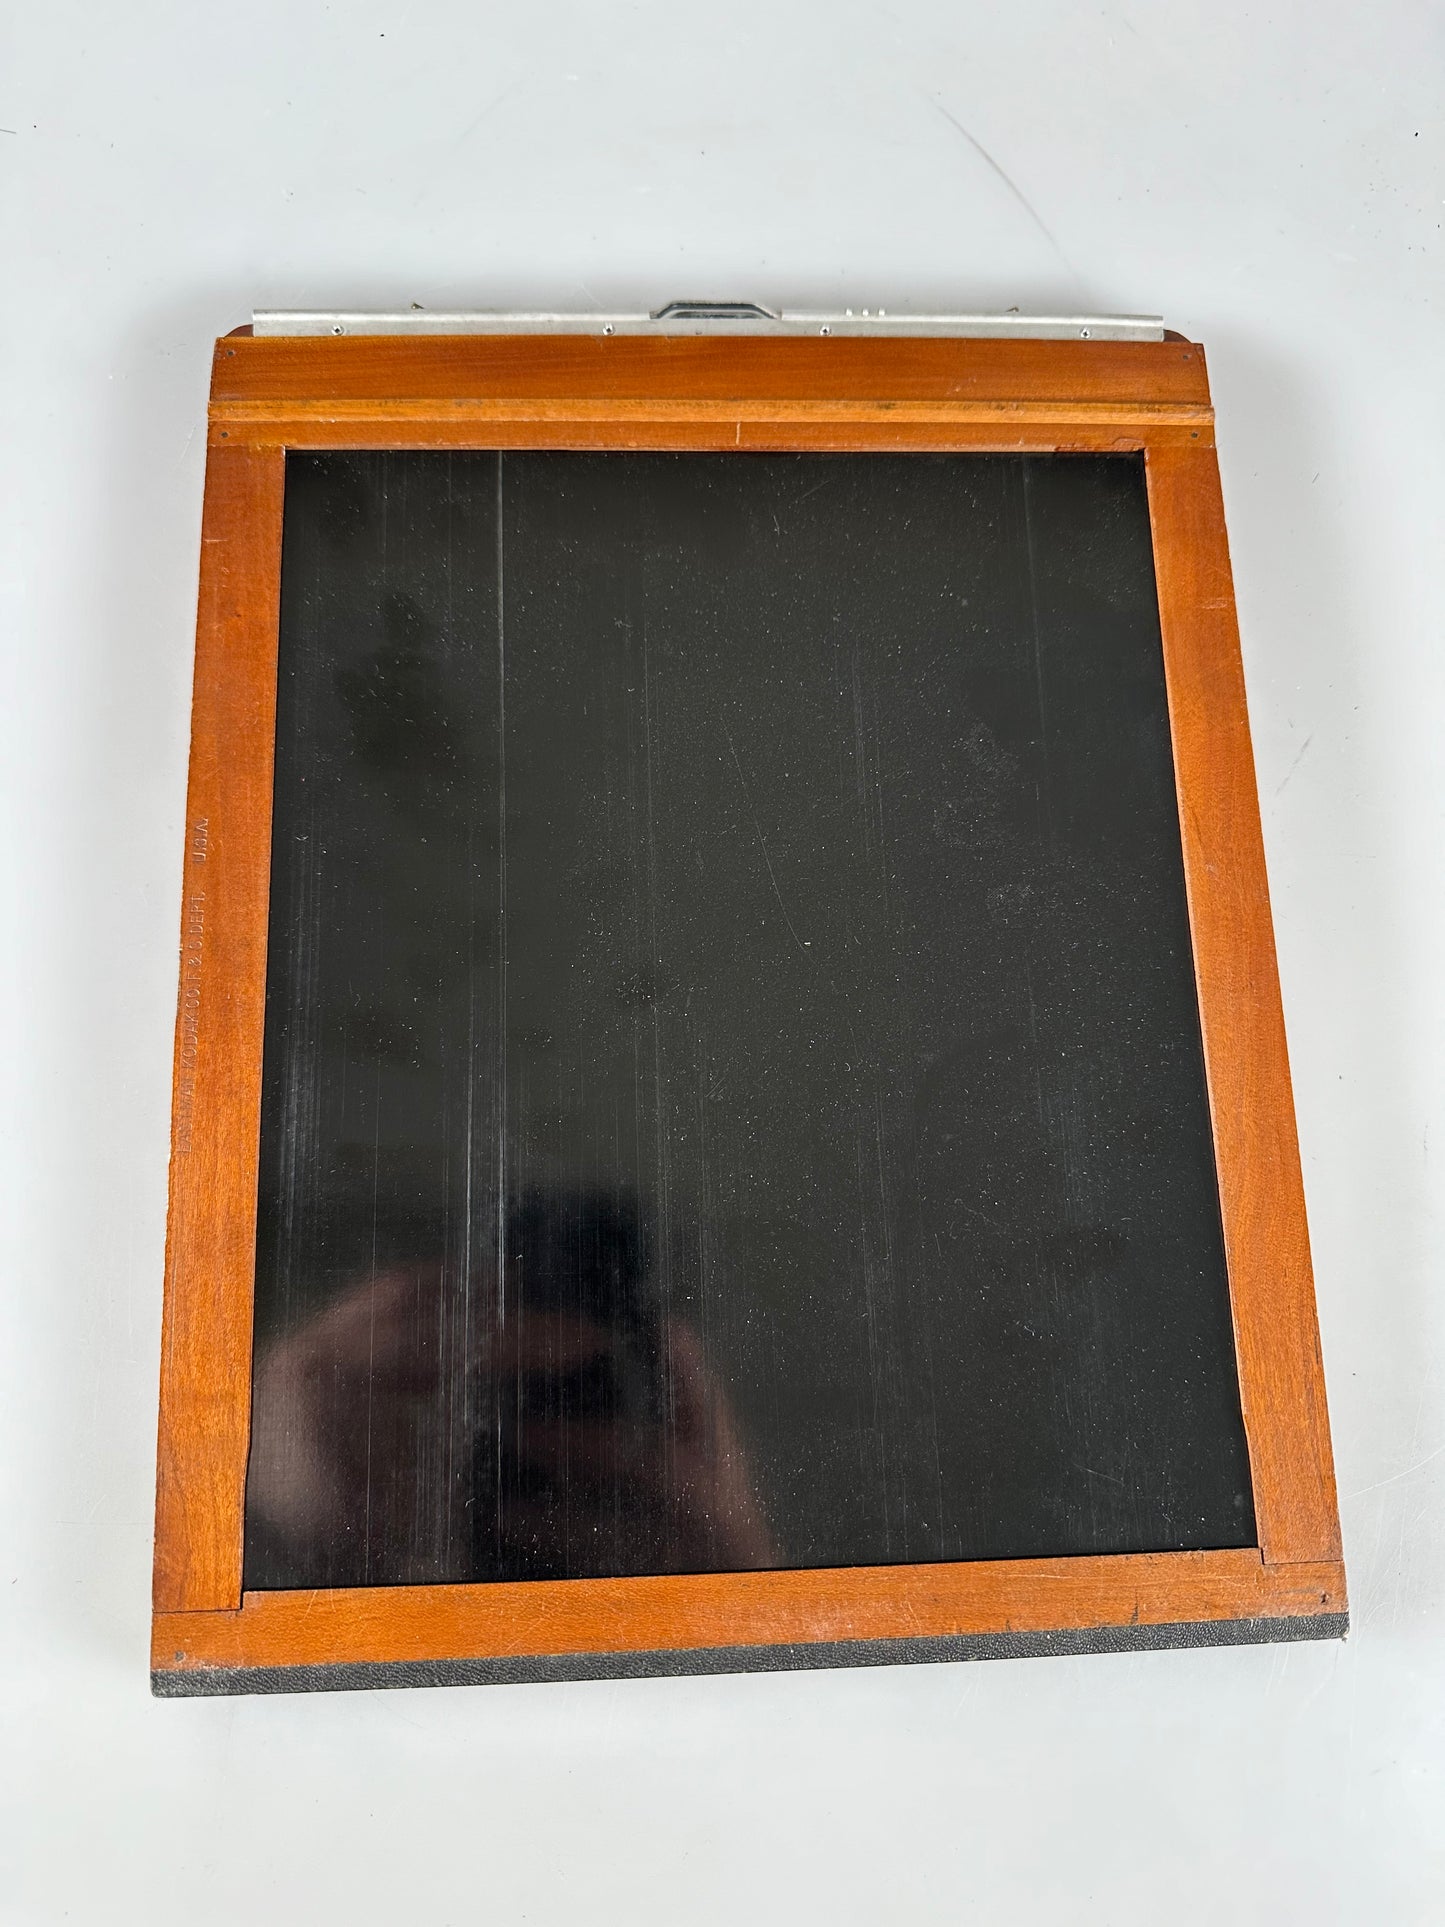 Eastman Kodak Folmer Schwin 8x10 Wood sheet film holder